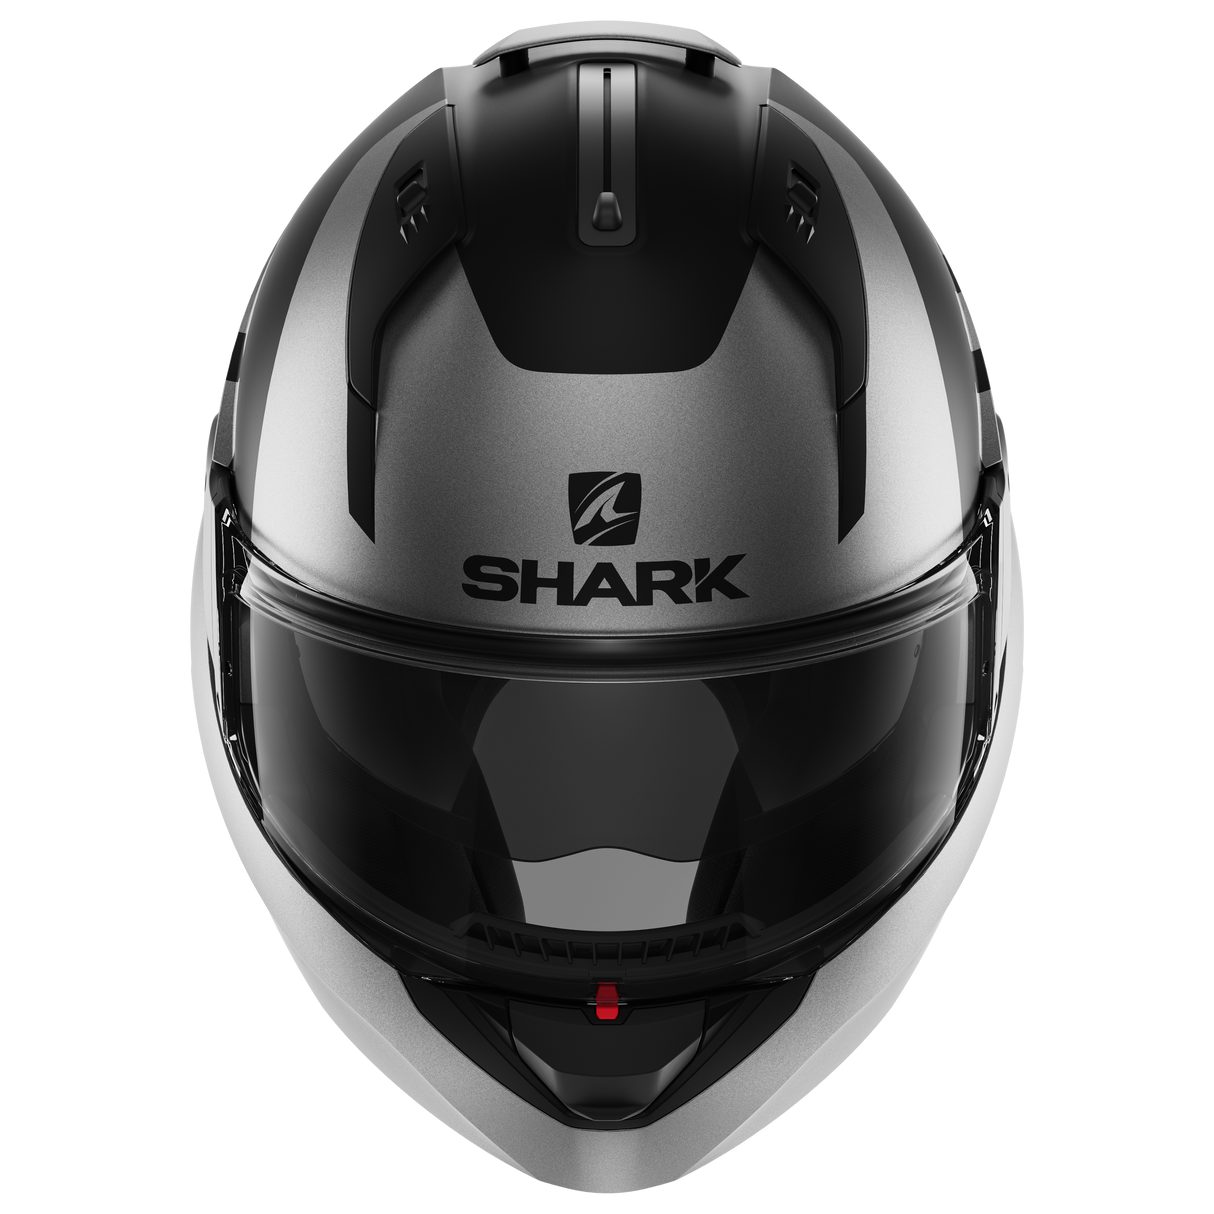 Shark Evo-ES Kedje Helmet Black/Anth/Black